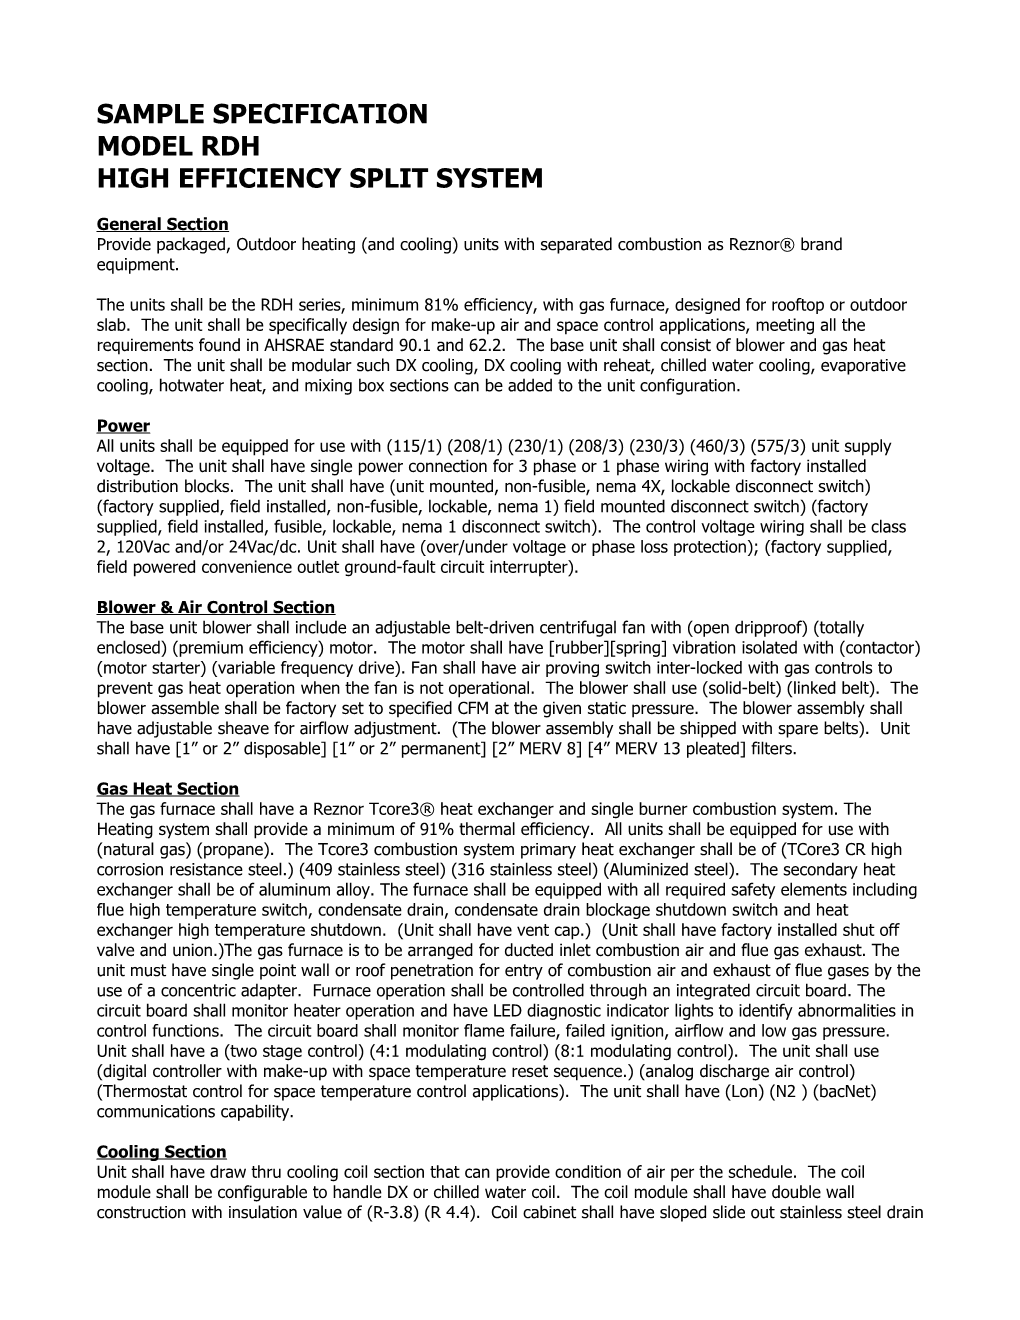 High Efficiency Split System